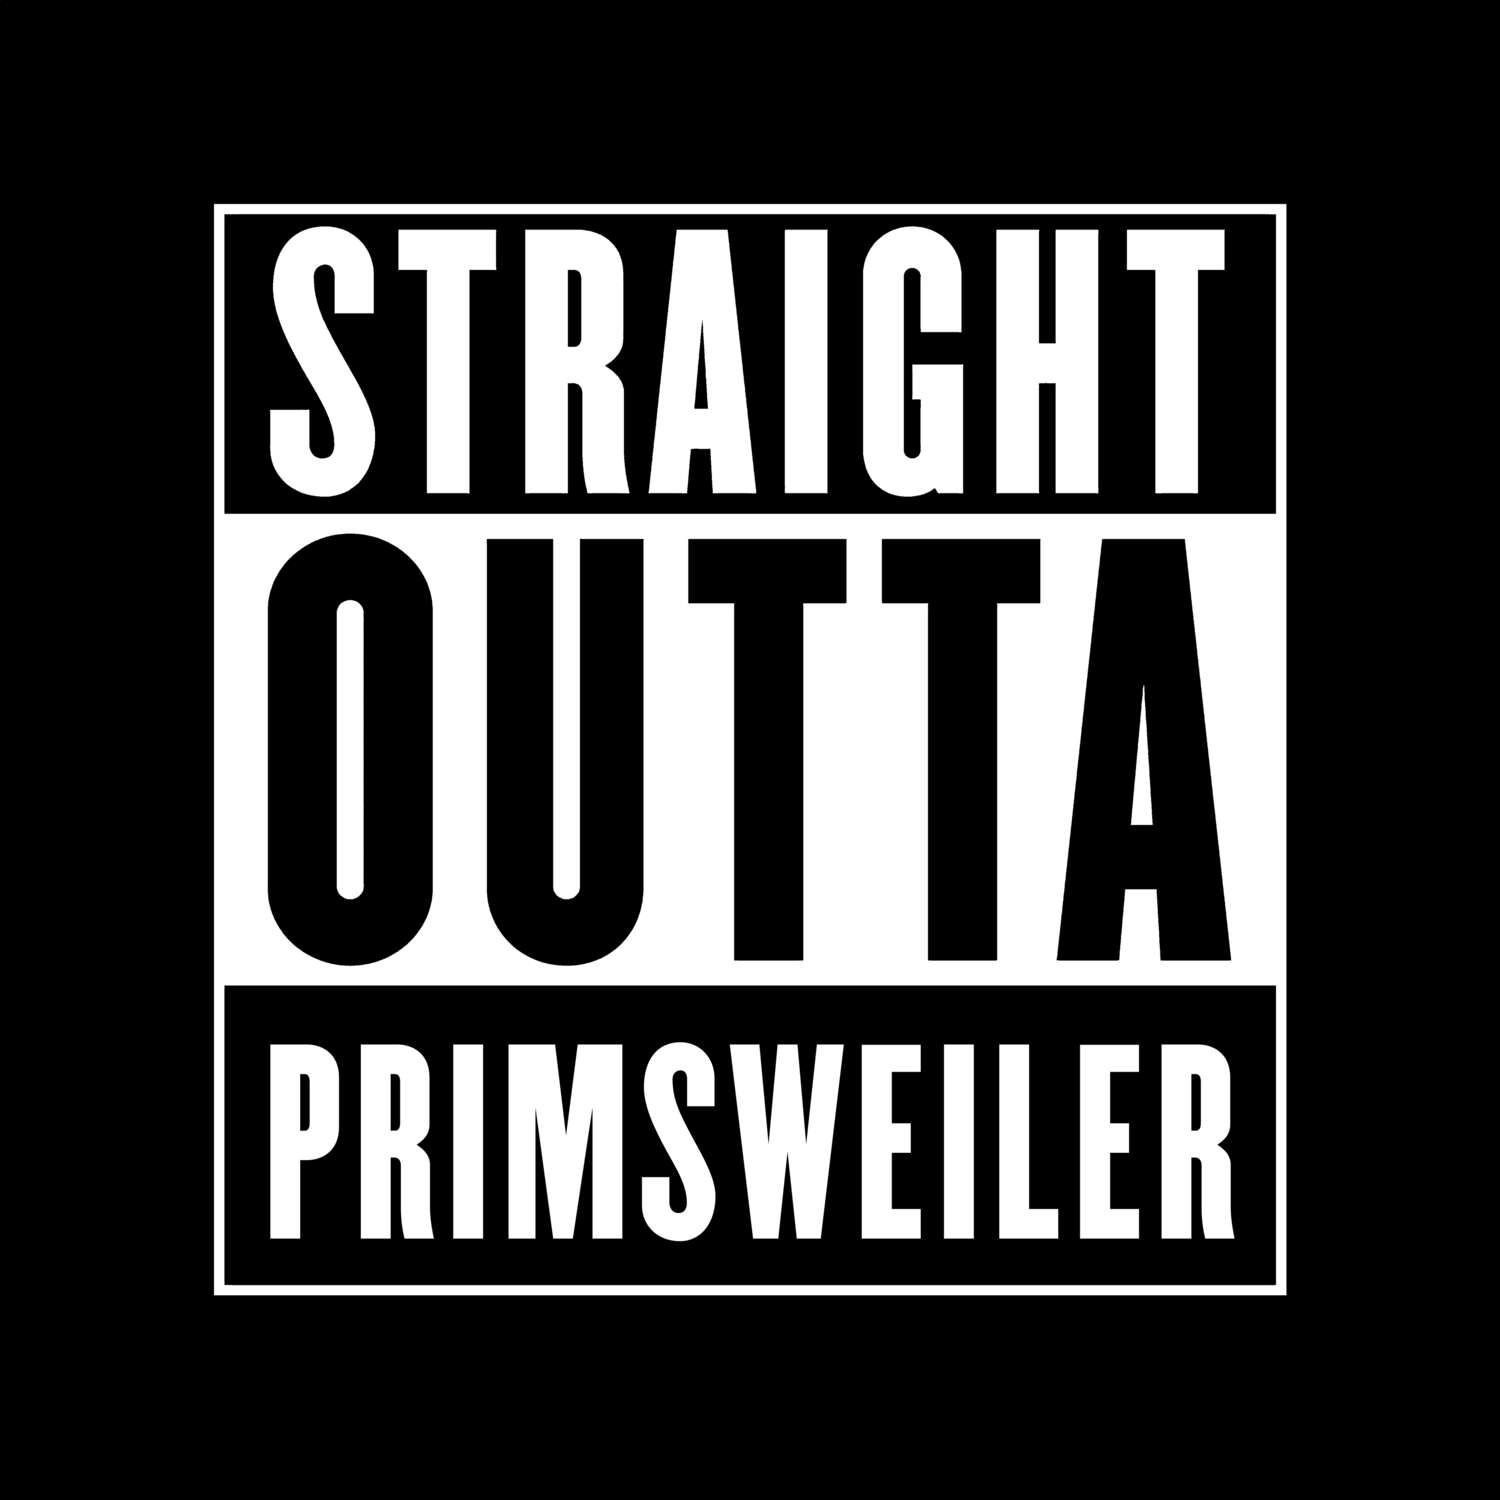 Primsweiler T-Shirt »Straight Outta«